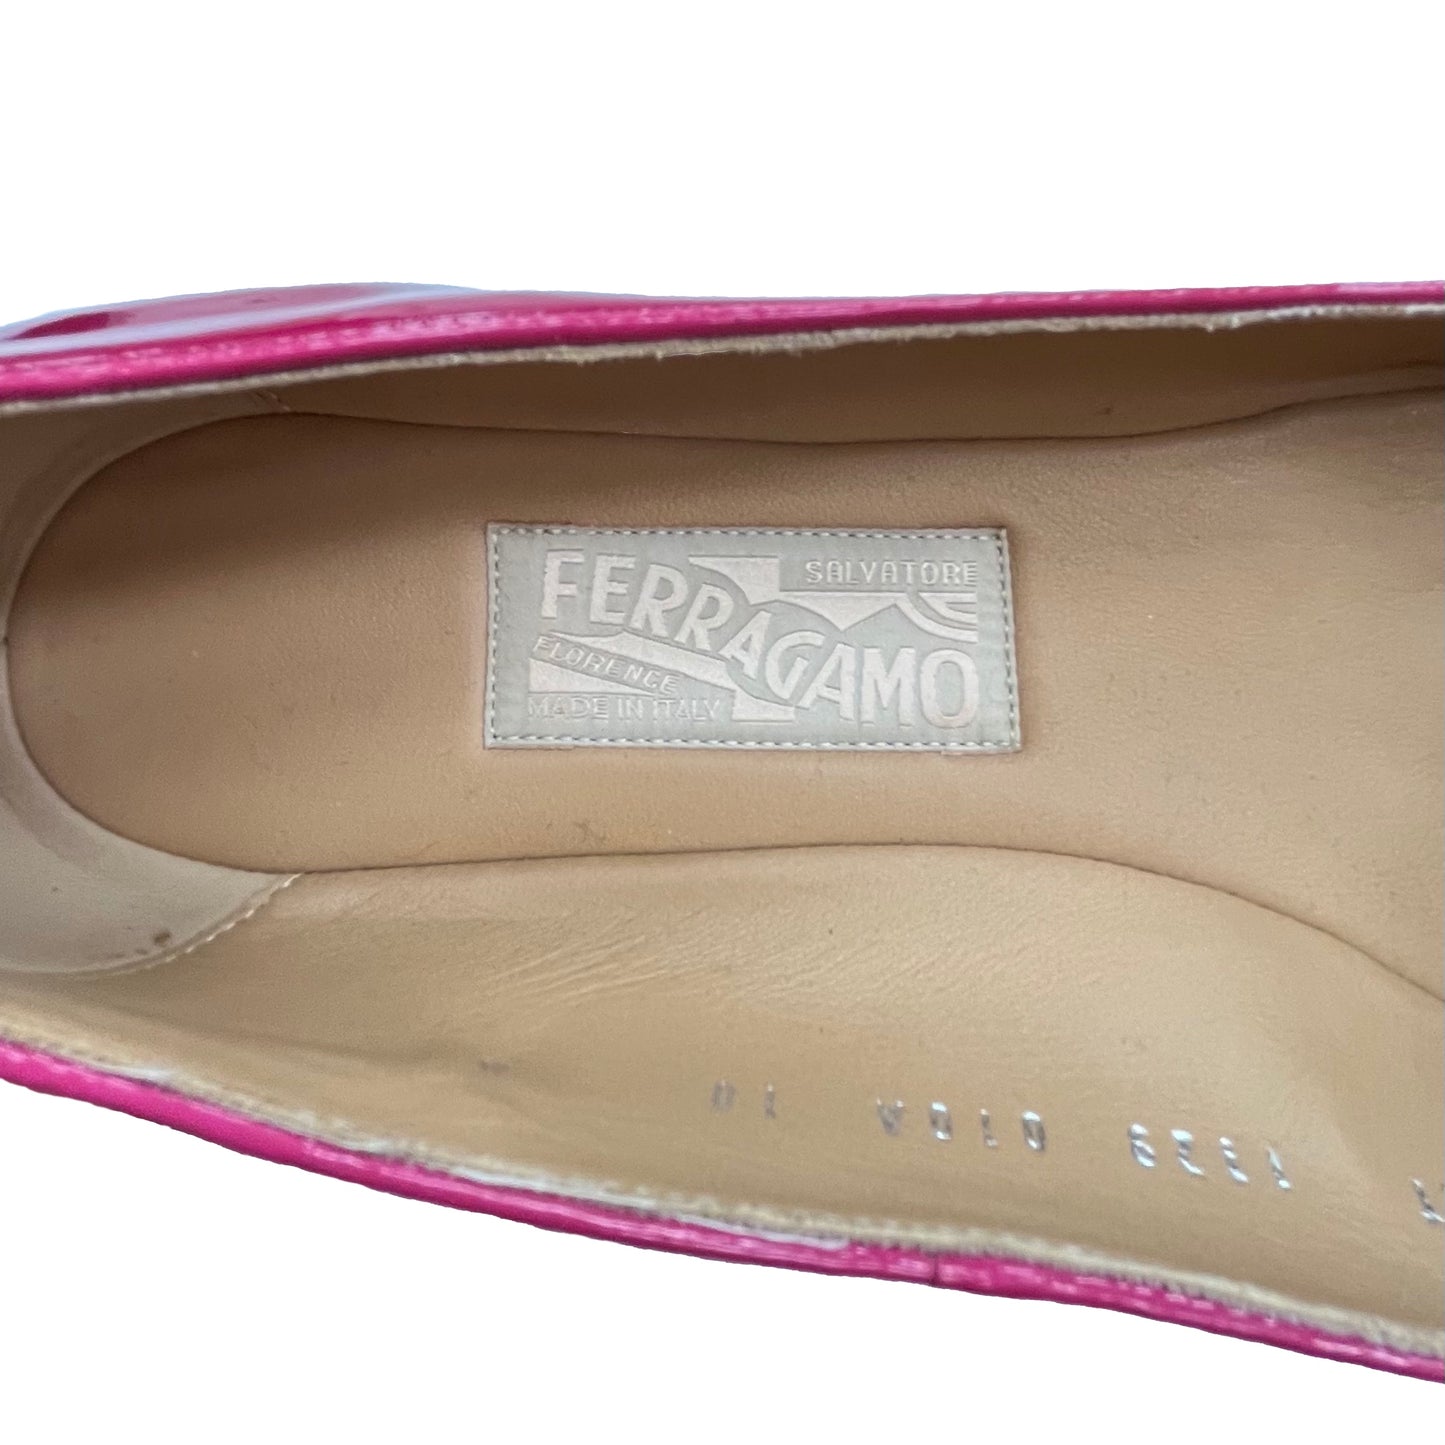 SALVATORE FERRAGAMO Pink Patent Leather Flats Size 10